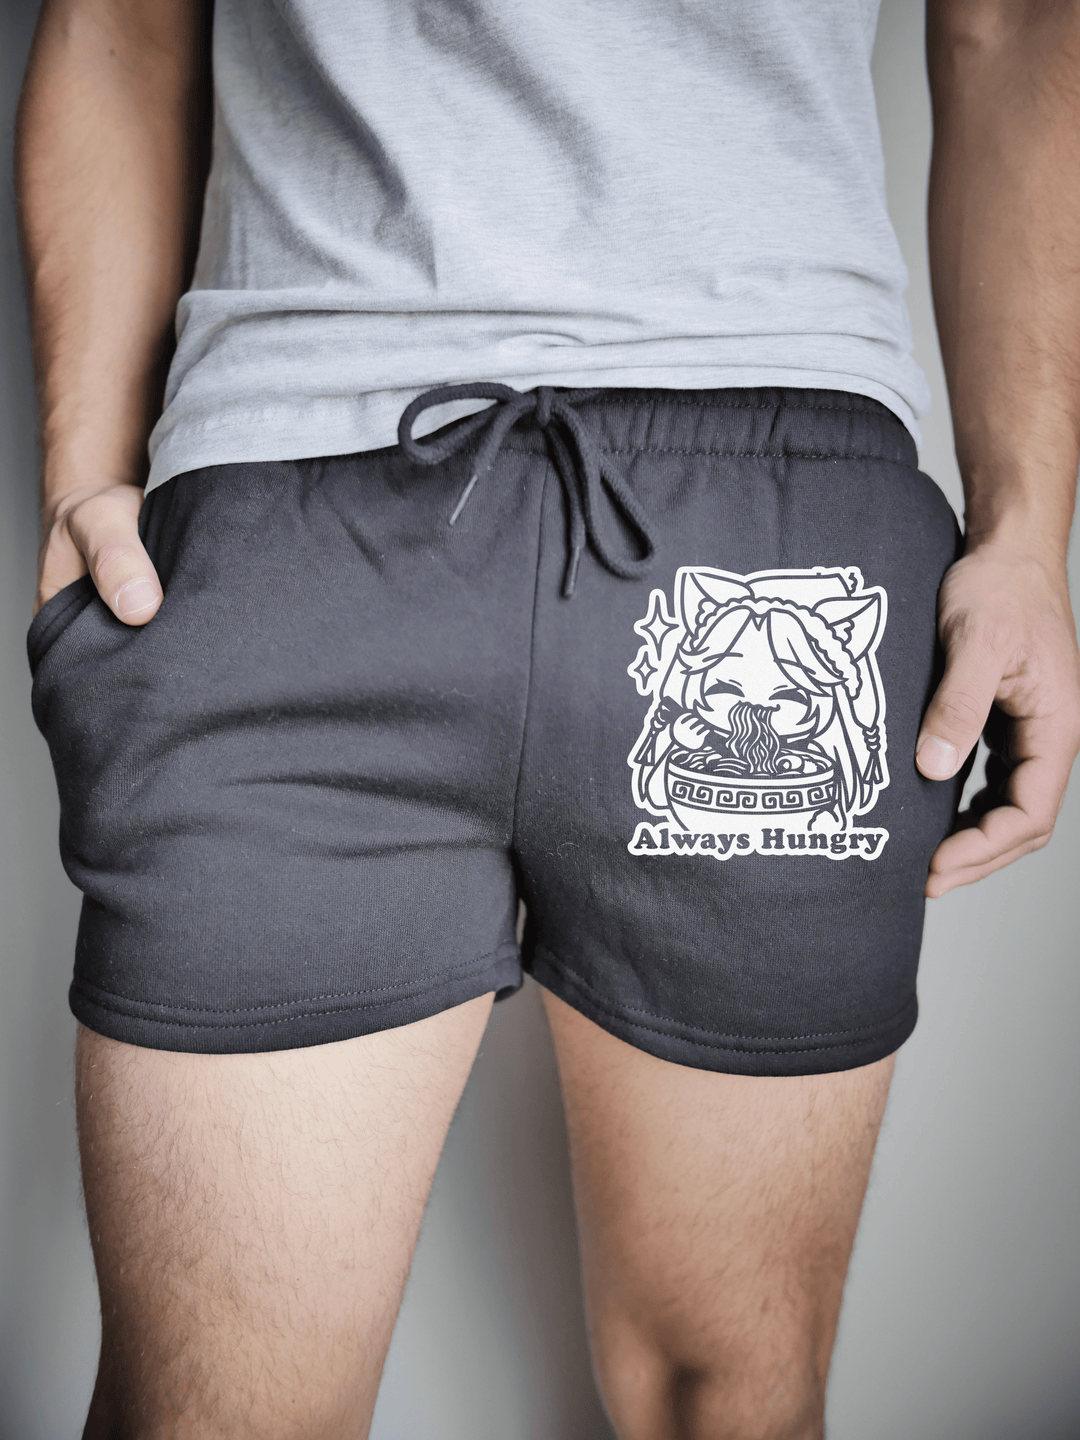 PixelThat Punderwear Shorts Black / S / Front Always Hungry Men's Gym Shorts